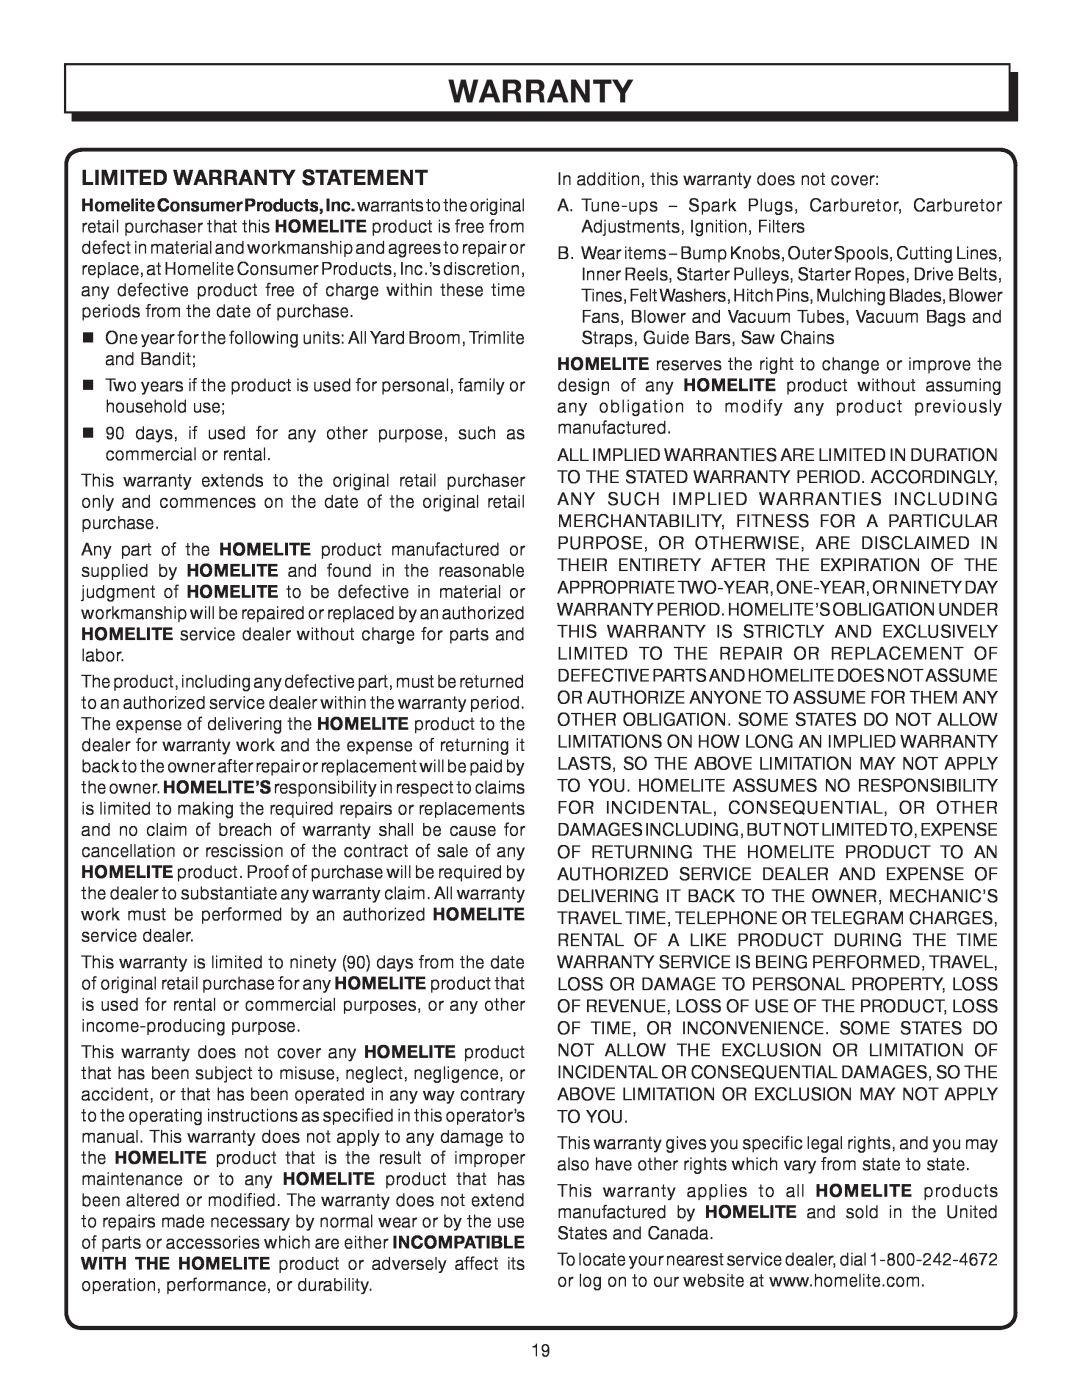 Homelite UT08542A manual Limited Warranty Statement 